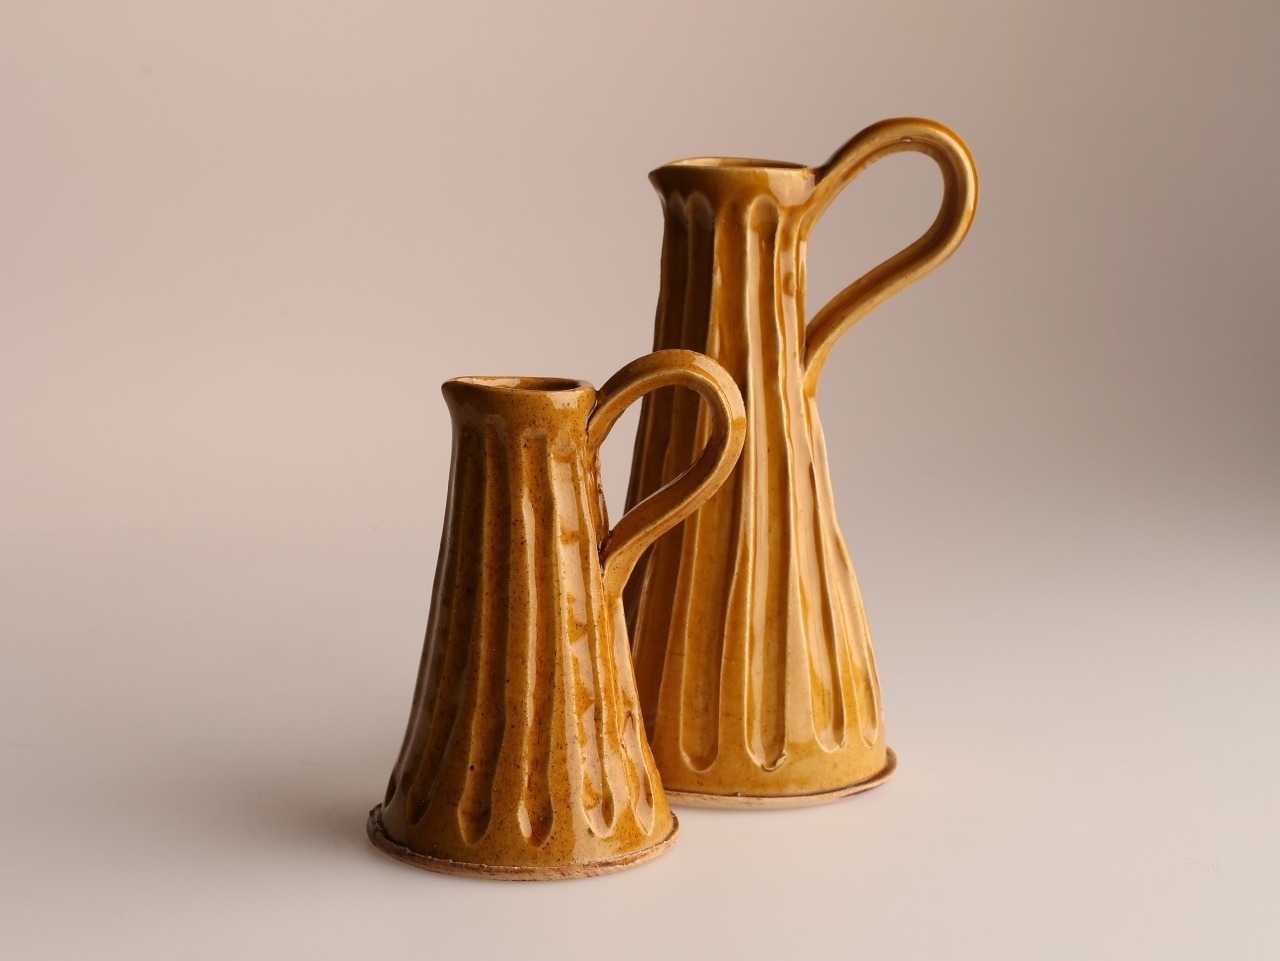 Neville Tatham - ceramics